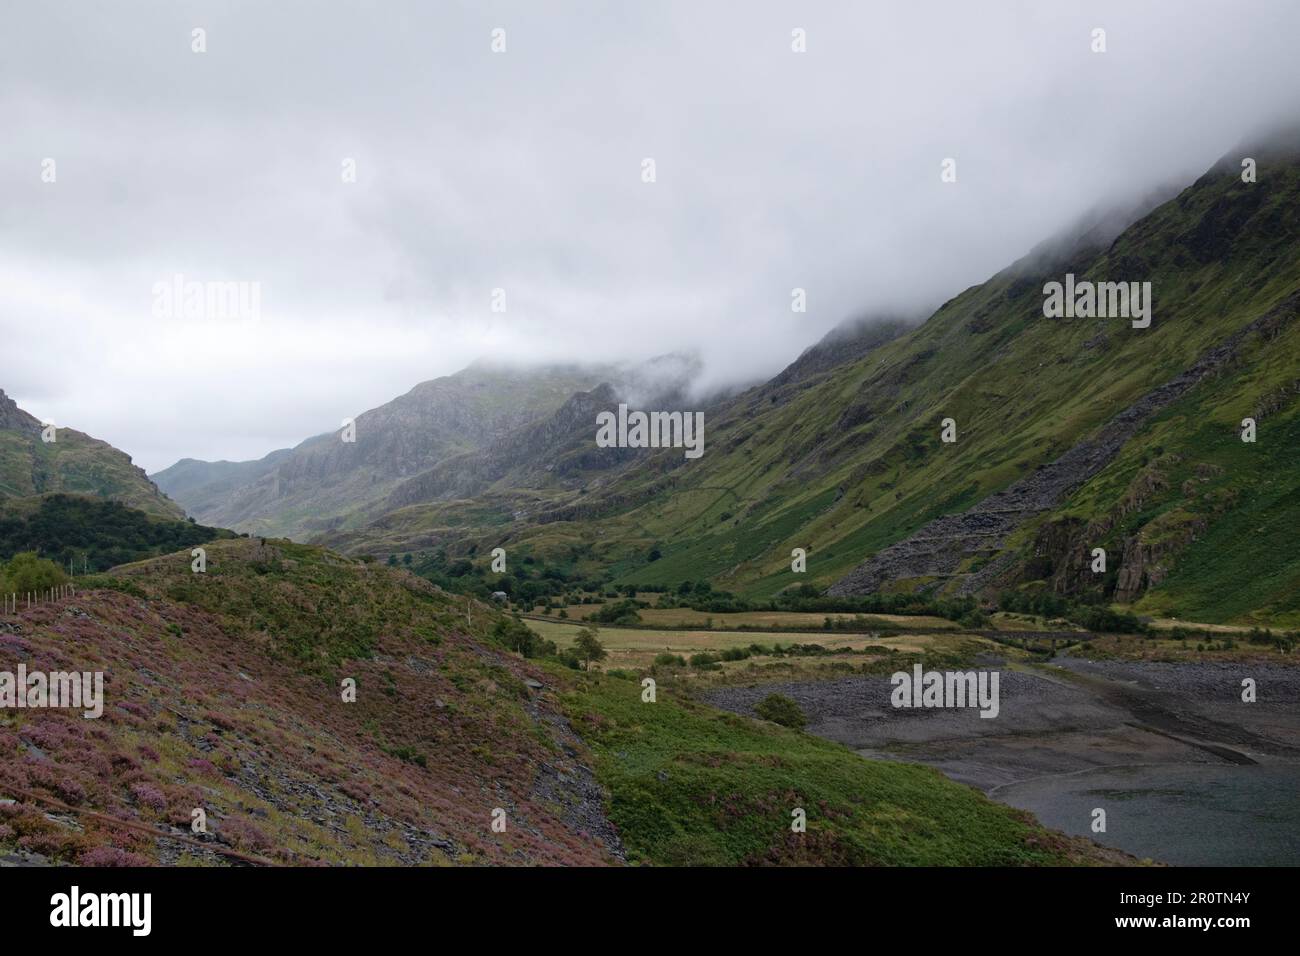 Nant Peris, Snowdonia valley and mountain cloudy sky Stock Photo